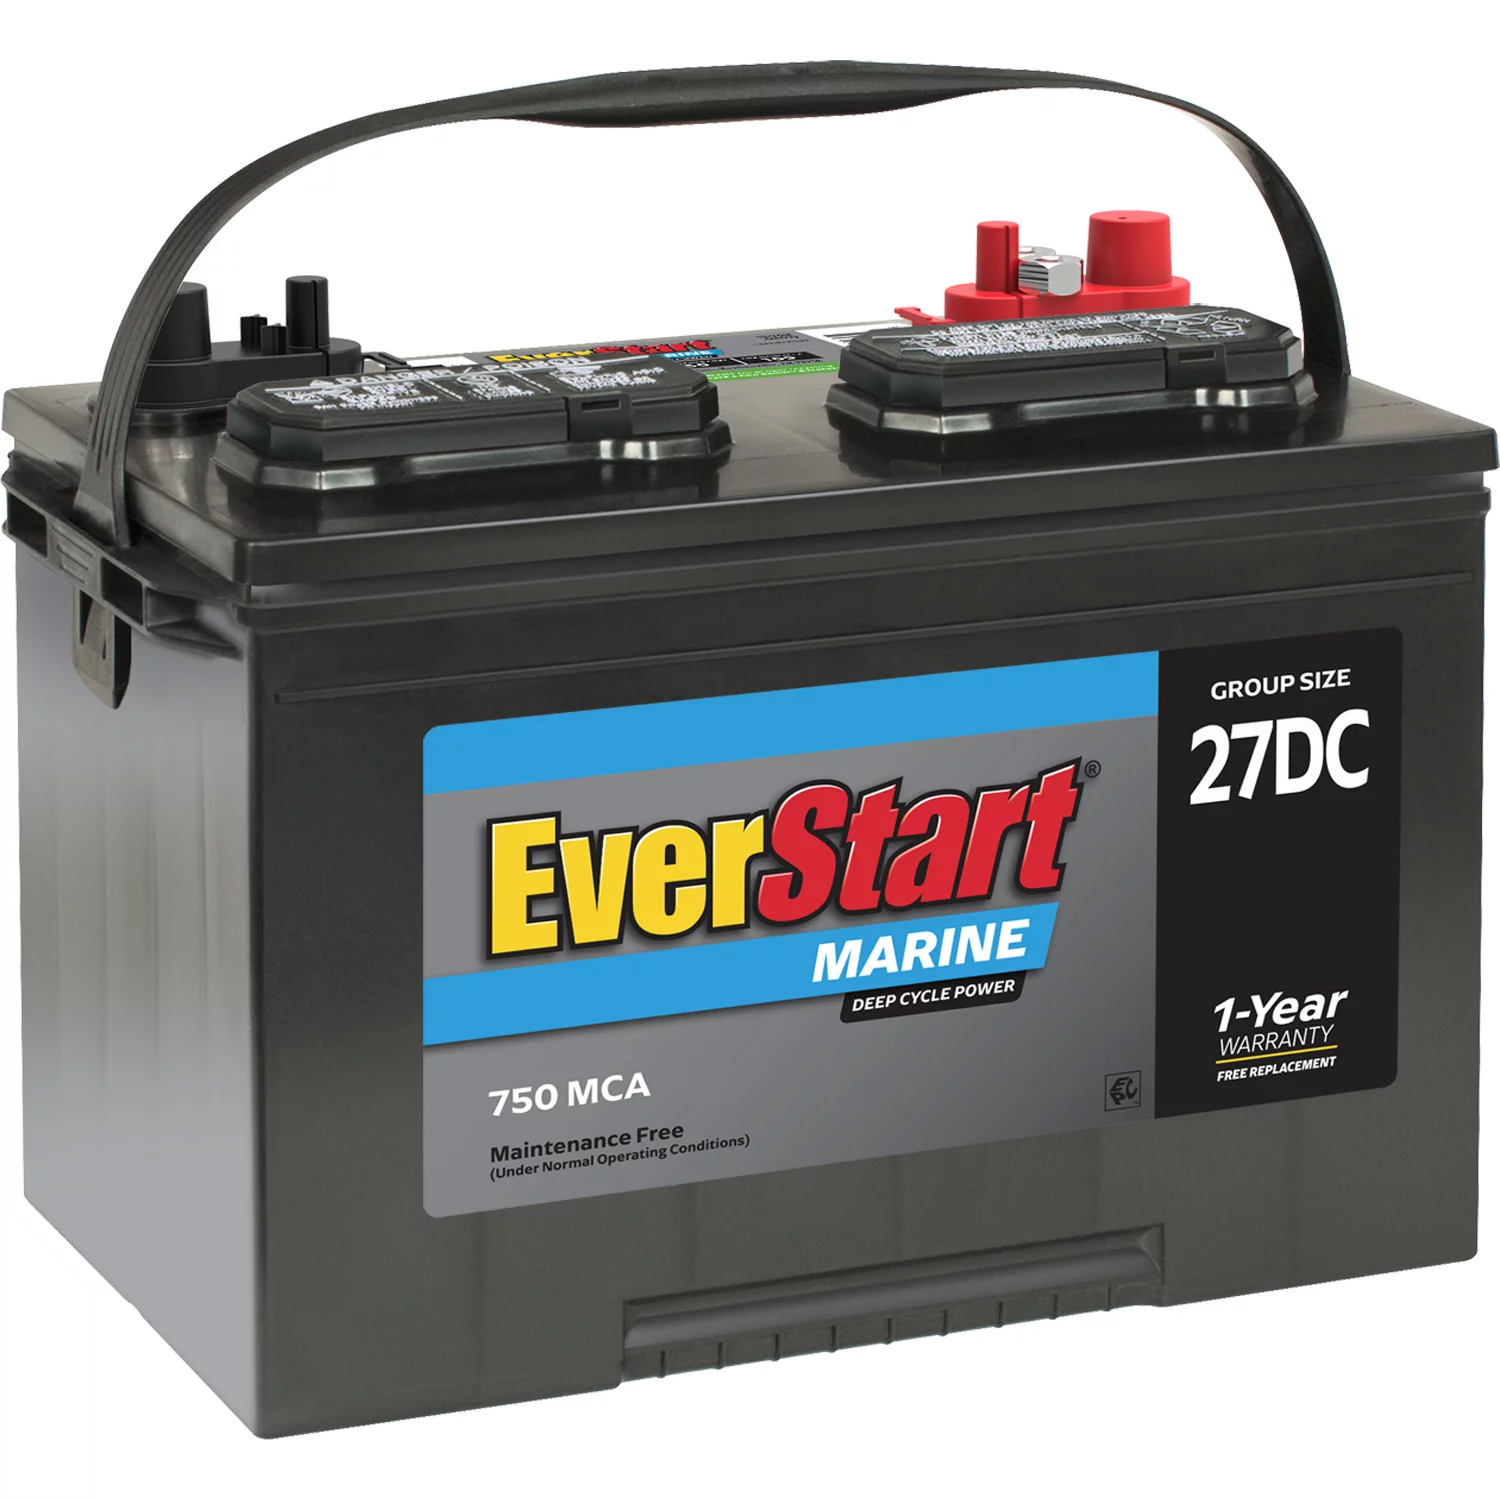 EverStart Lead Acid Marine & RV Deep Cycle Battery, Group Size 27DC 12 Volt, 750 MCA